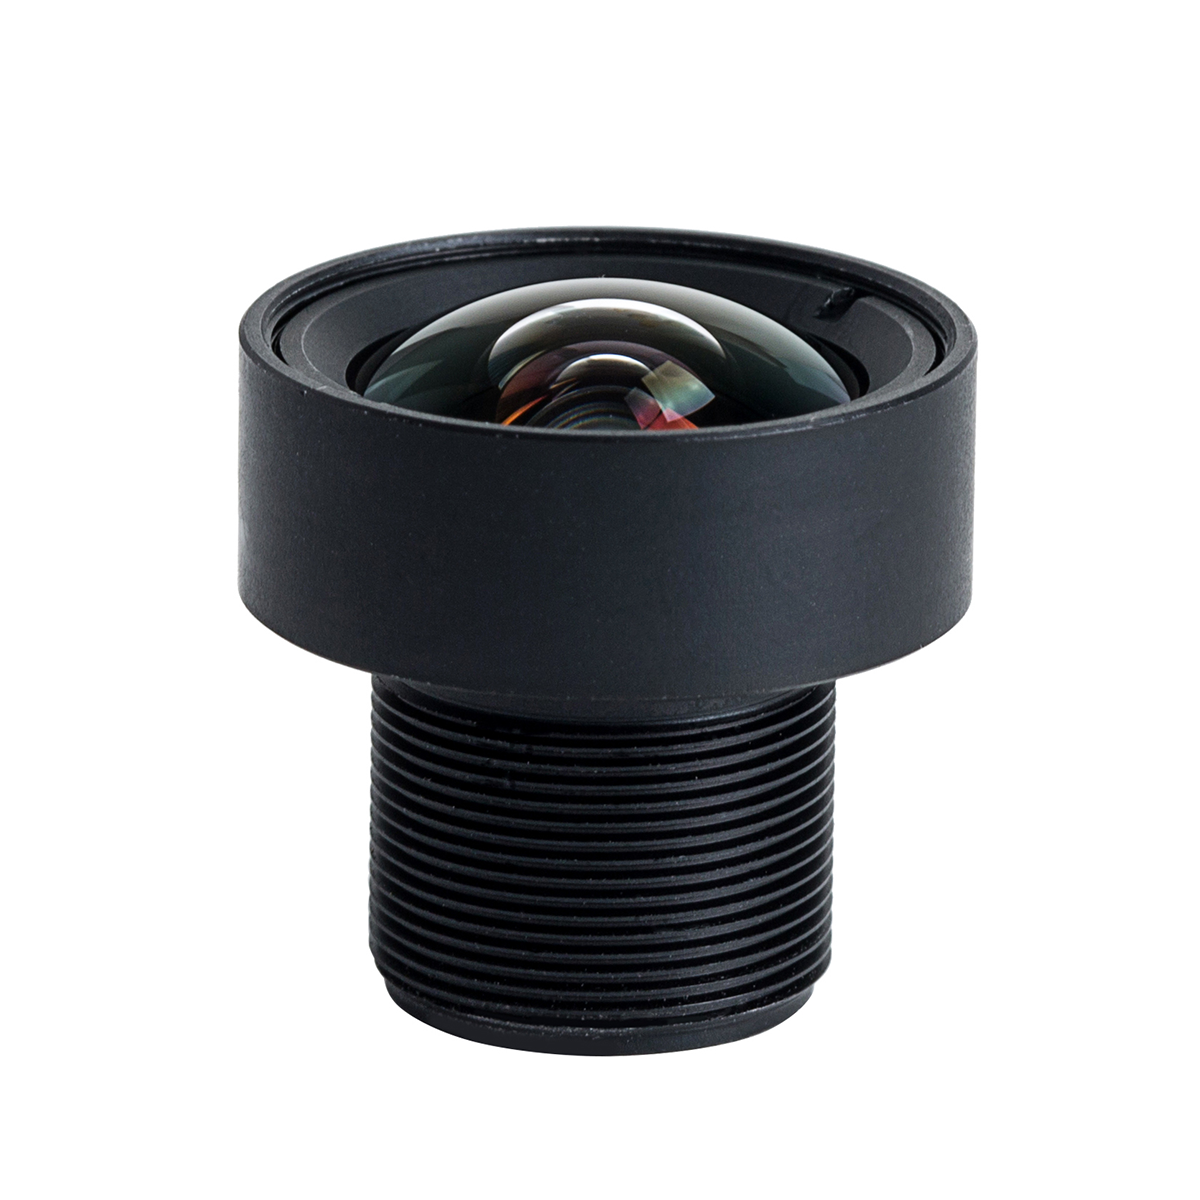 M12 Lens ဆိုတာ ဘာလဲ။M12 Lens ကို ဘယ်လို အာရုံစူးစိုက်မလဲ။M12 Lens အတွက် အမြင့်ဆုံး Sensor Size က ဘယ်လောက်လဲ။M12 Mount Lenses က ဘာအတွက်လဲ။